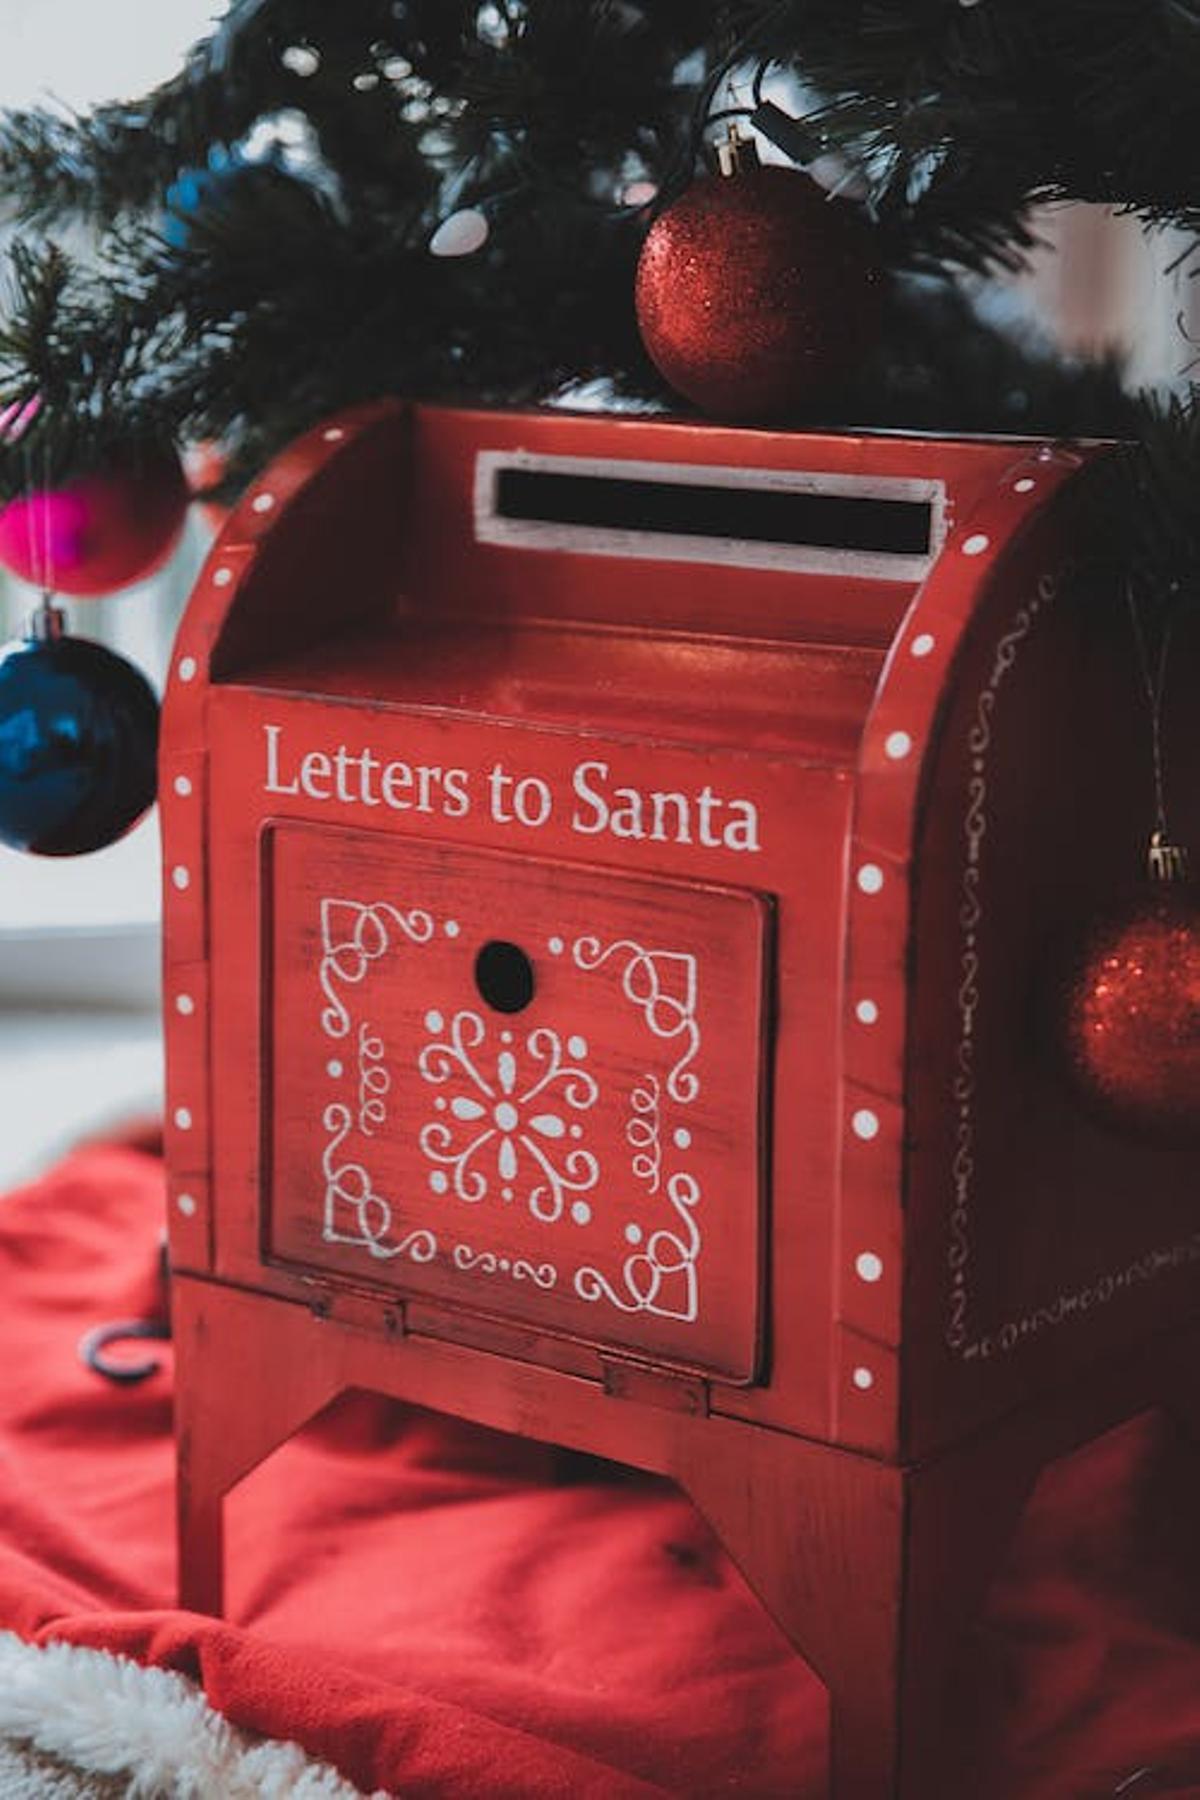 Buzón para enviar las cartas a Papá Noel